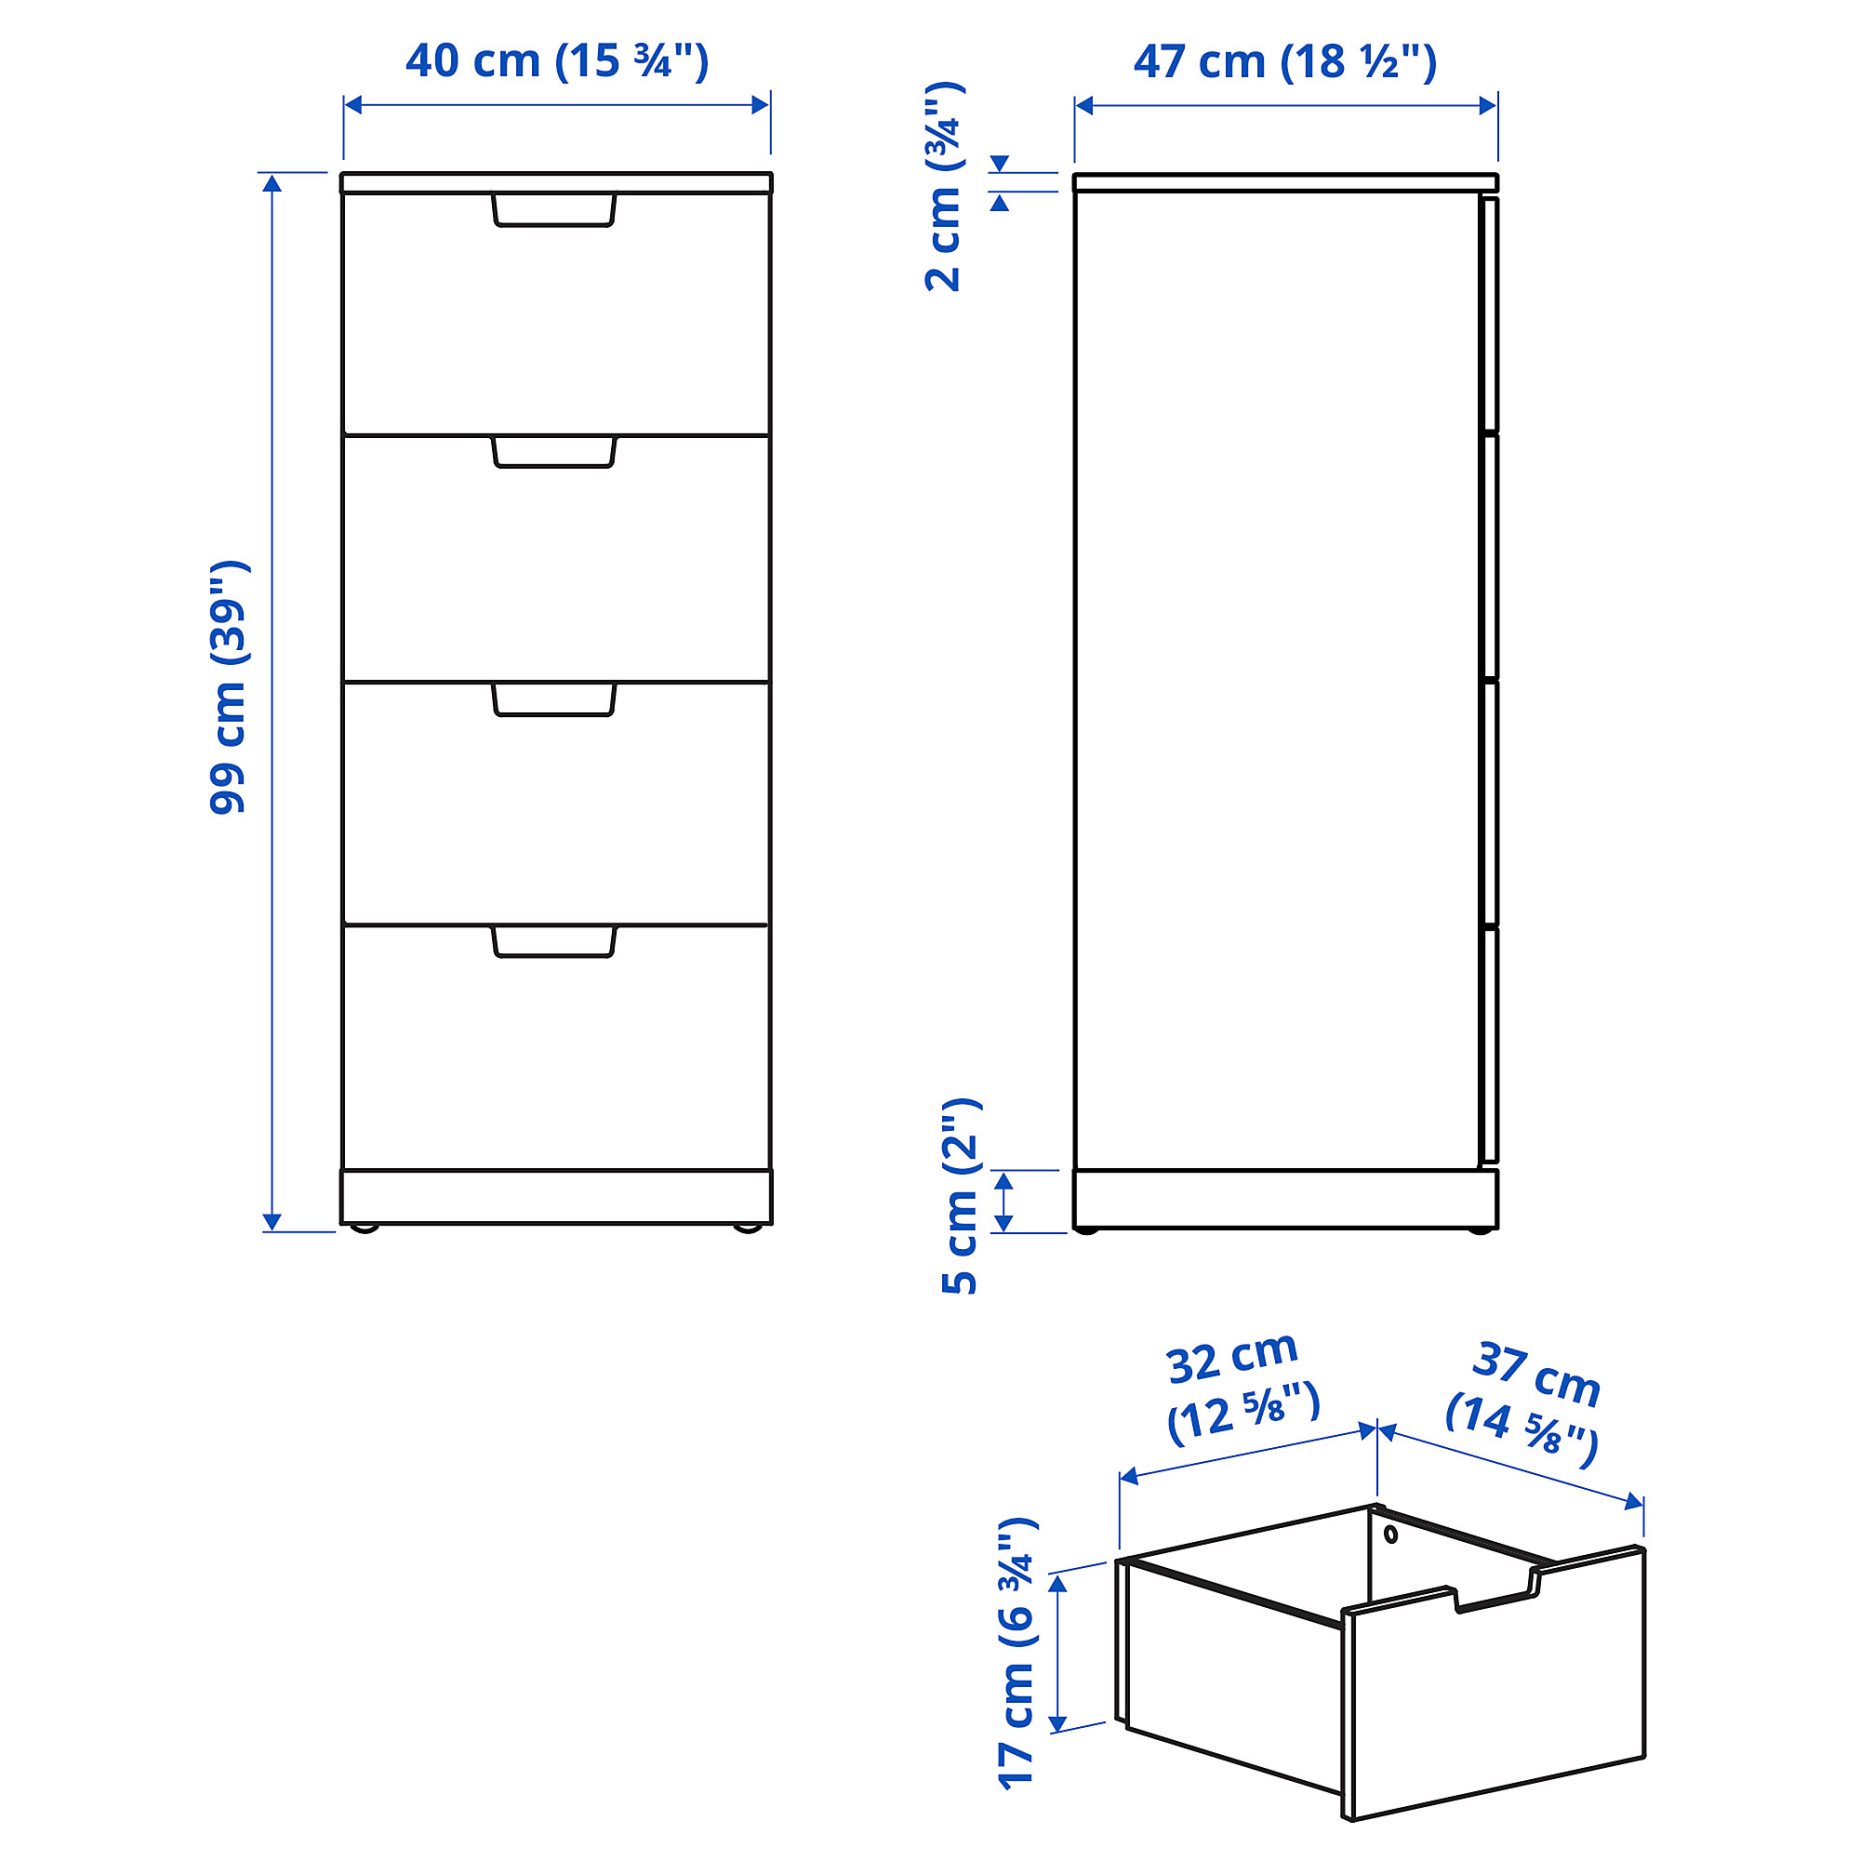 NORDLI, chest of 4 drawers, 40x99 cm, 792.398.43